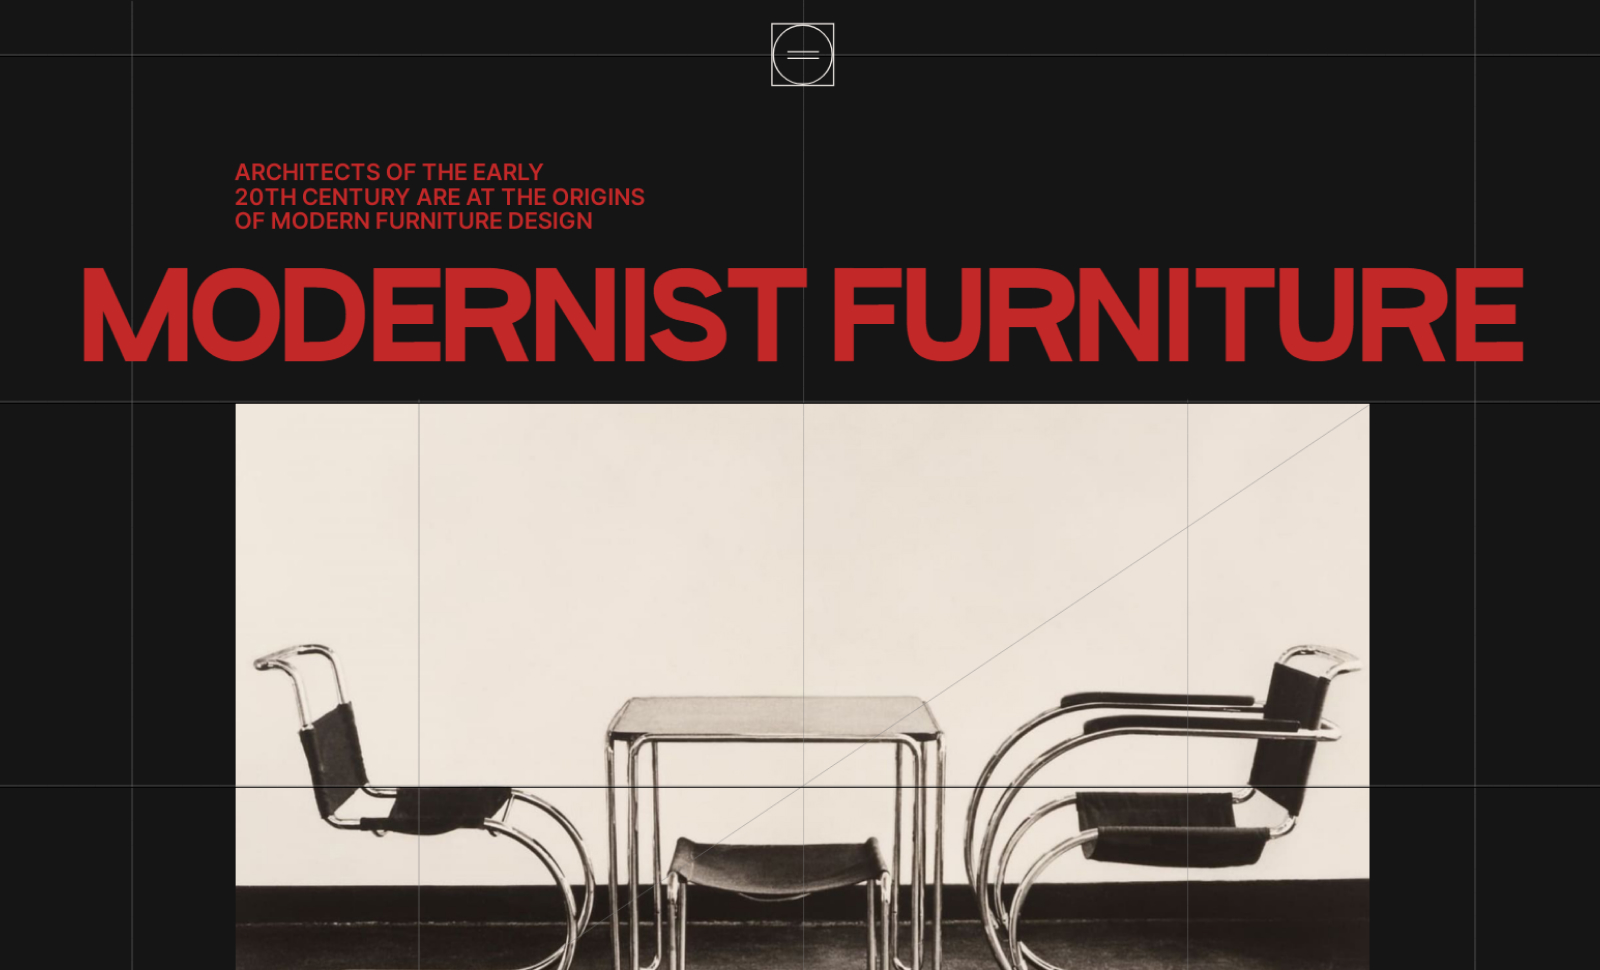 Modernist furniture